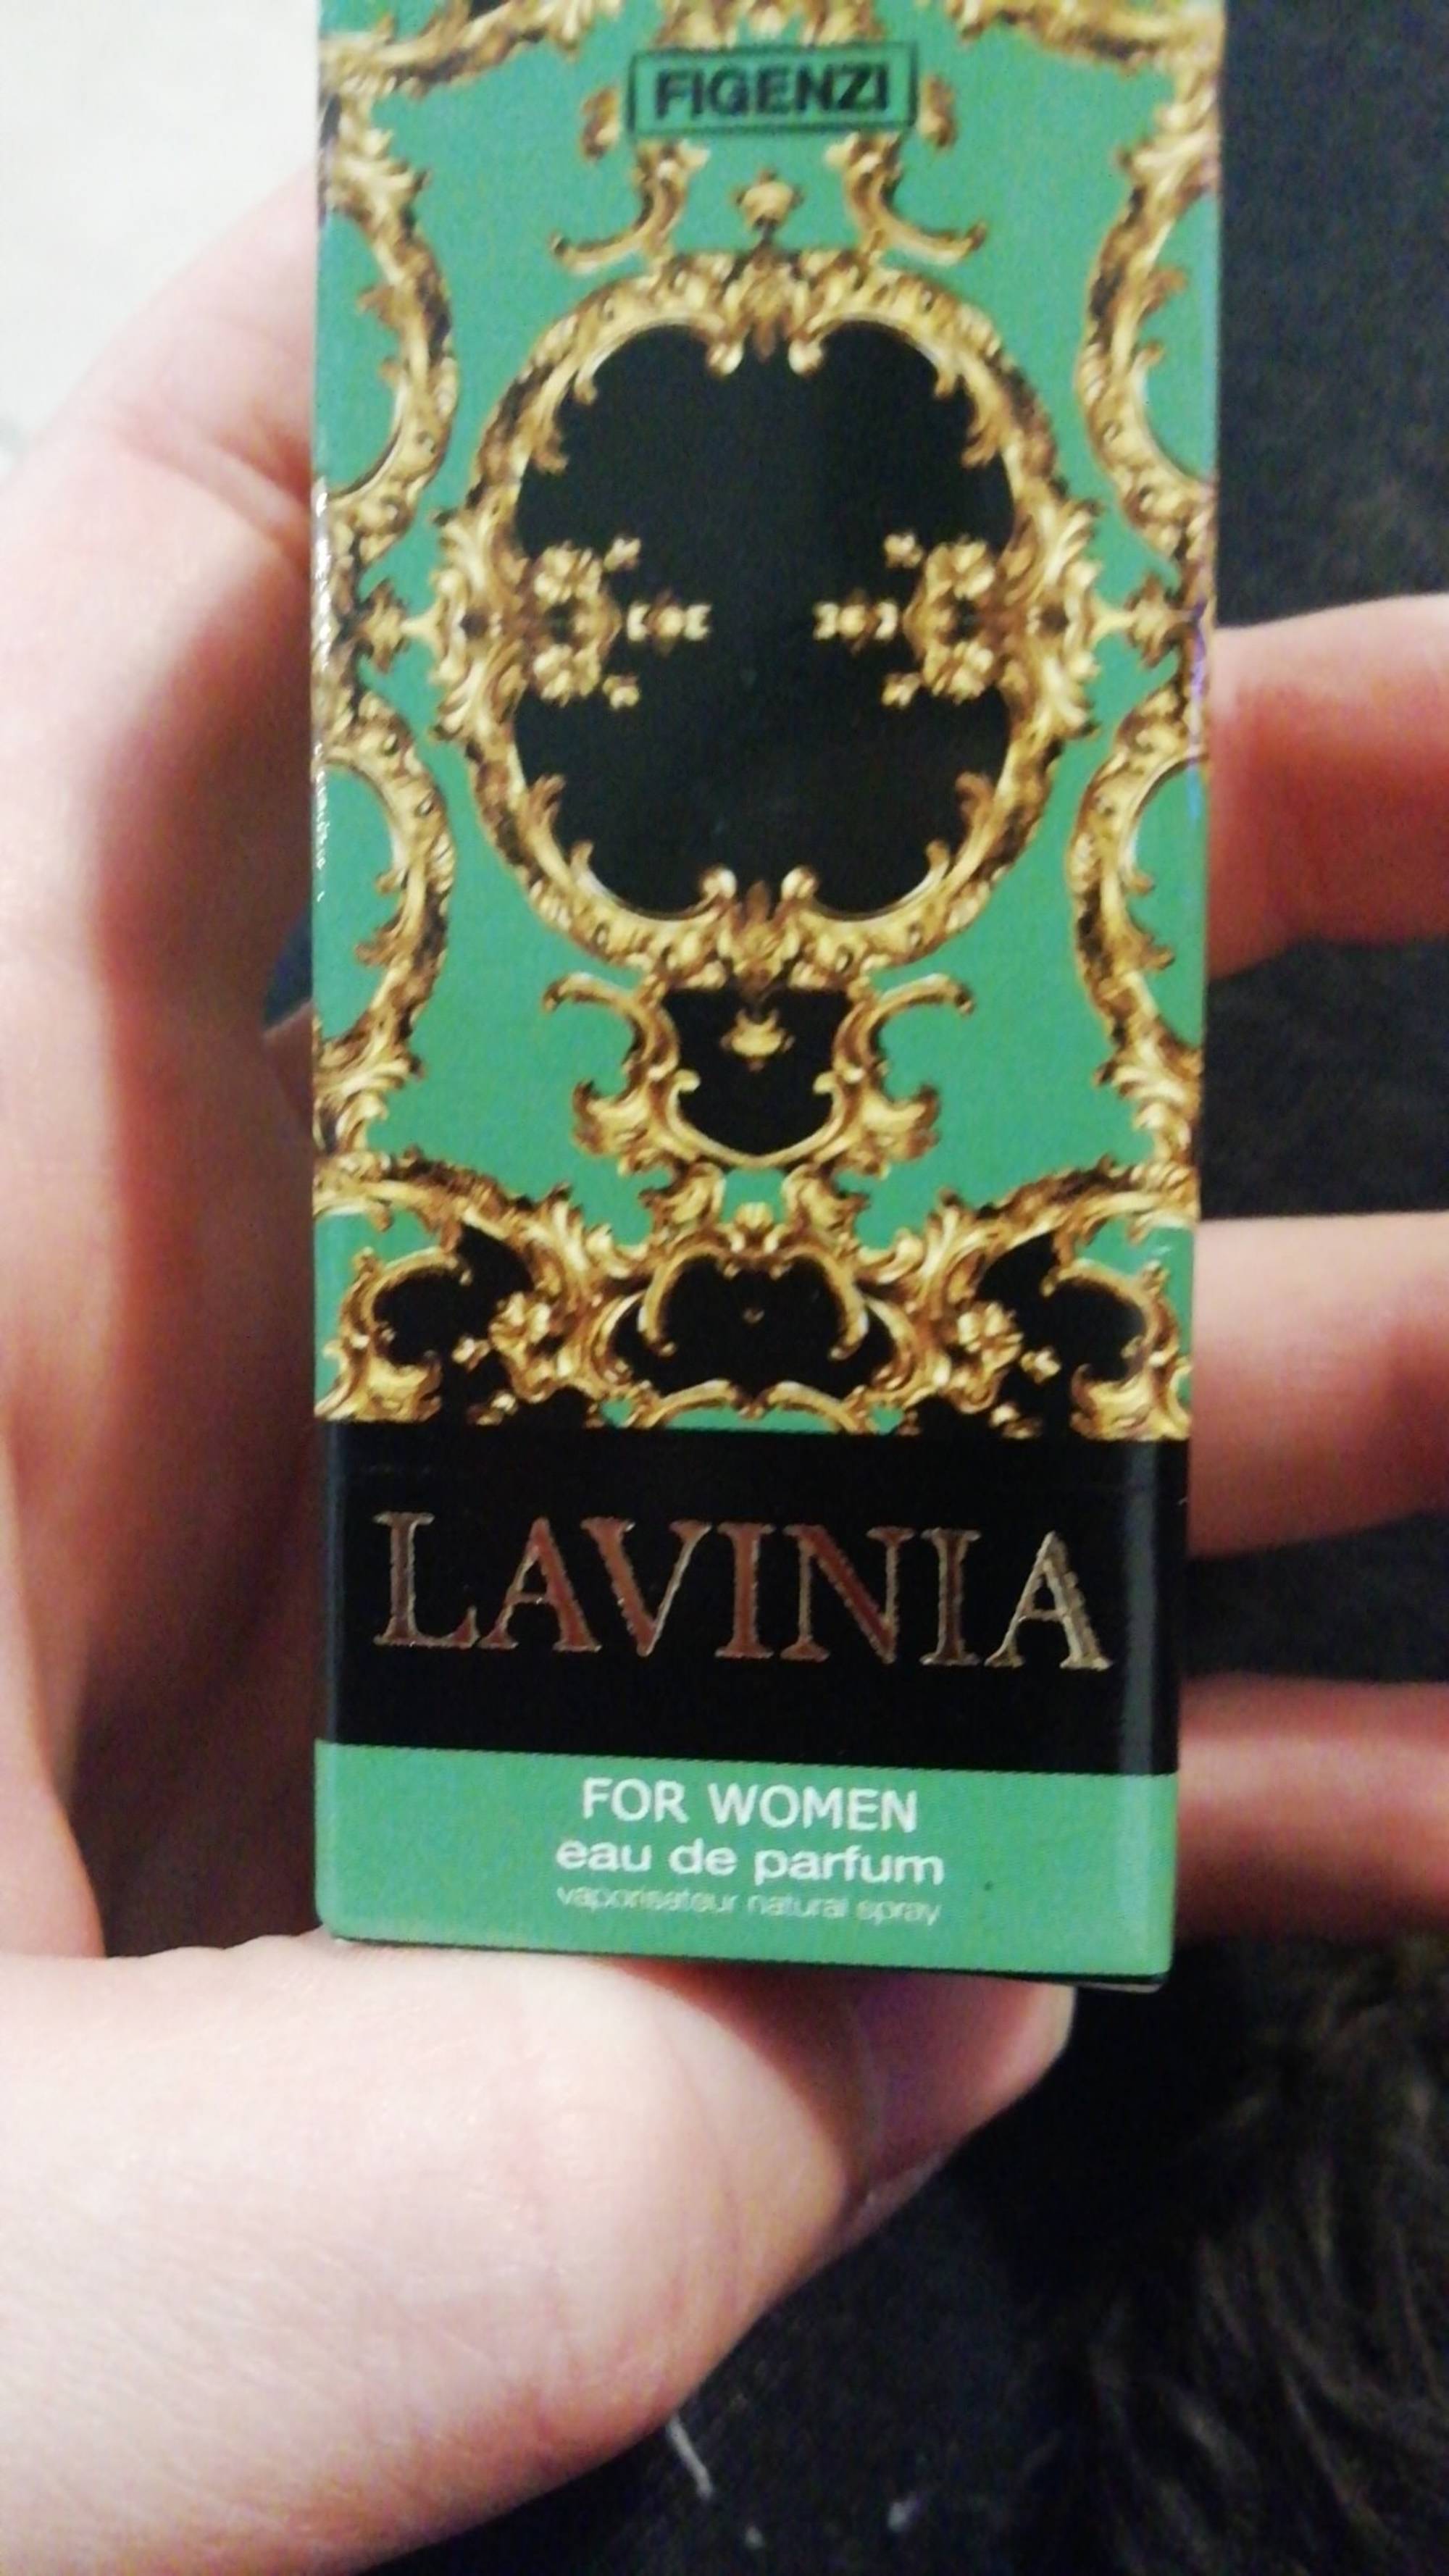 FIGENZI - Lavinia - Eau de parfum for women 